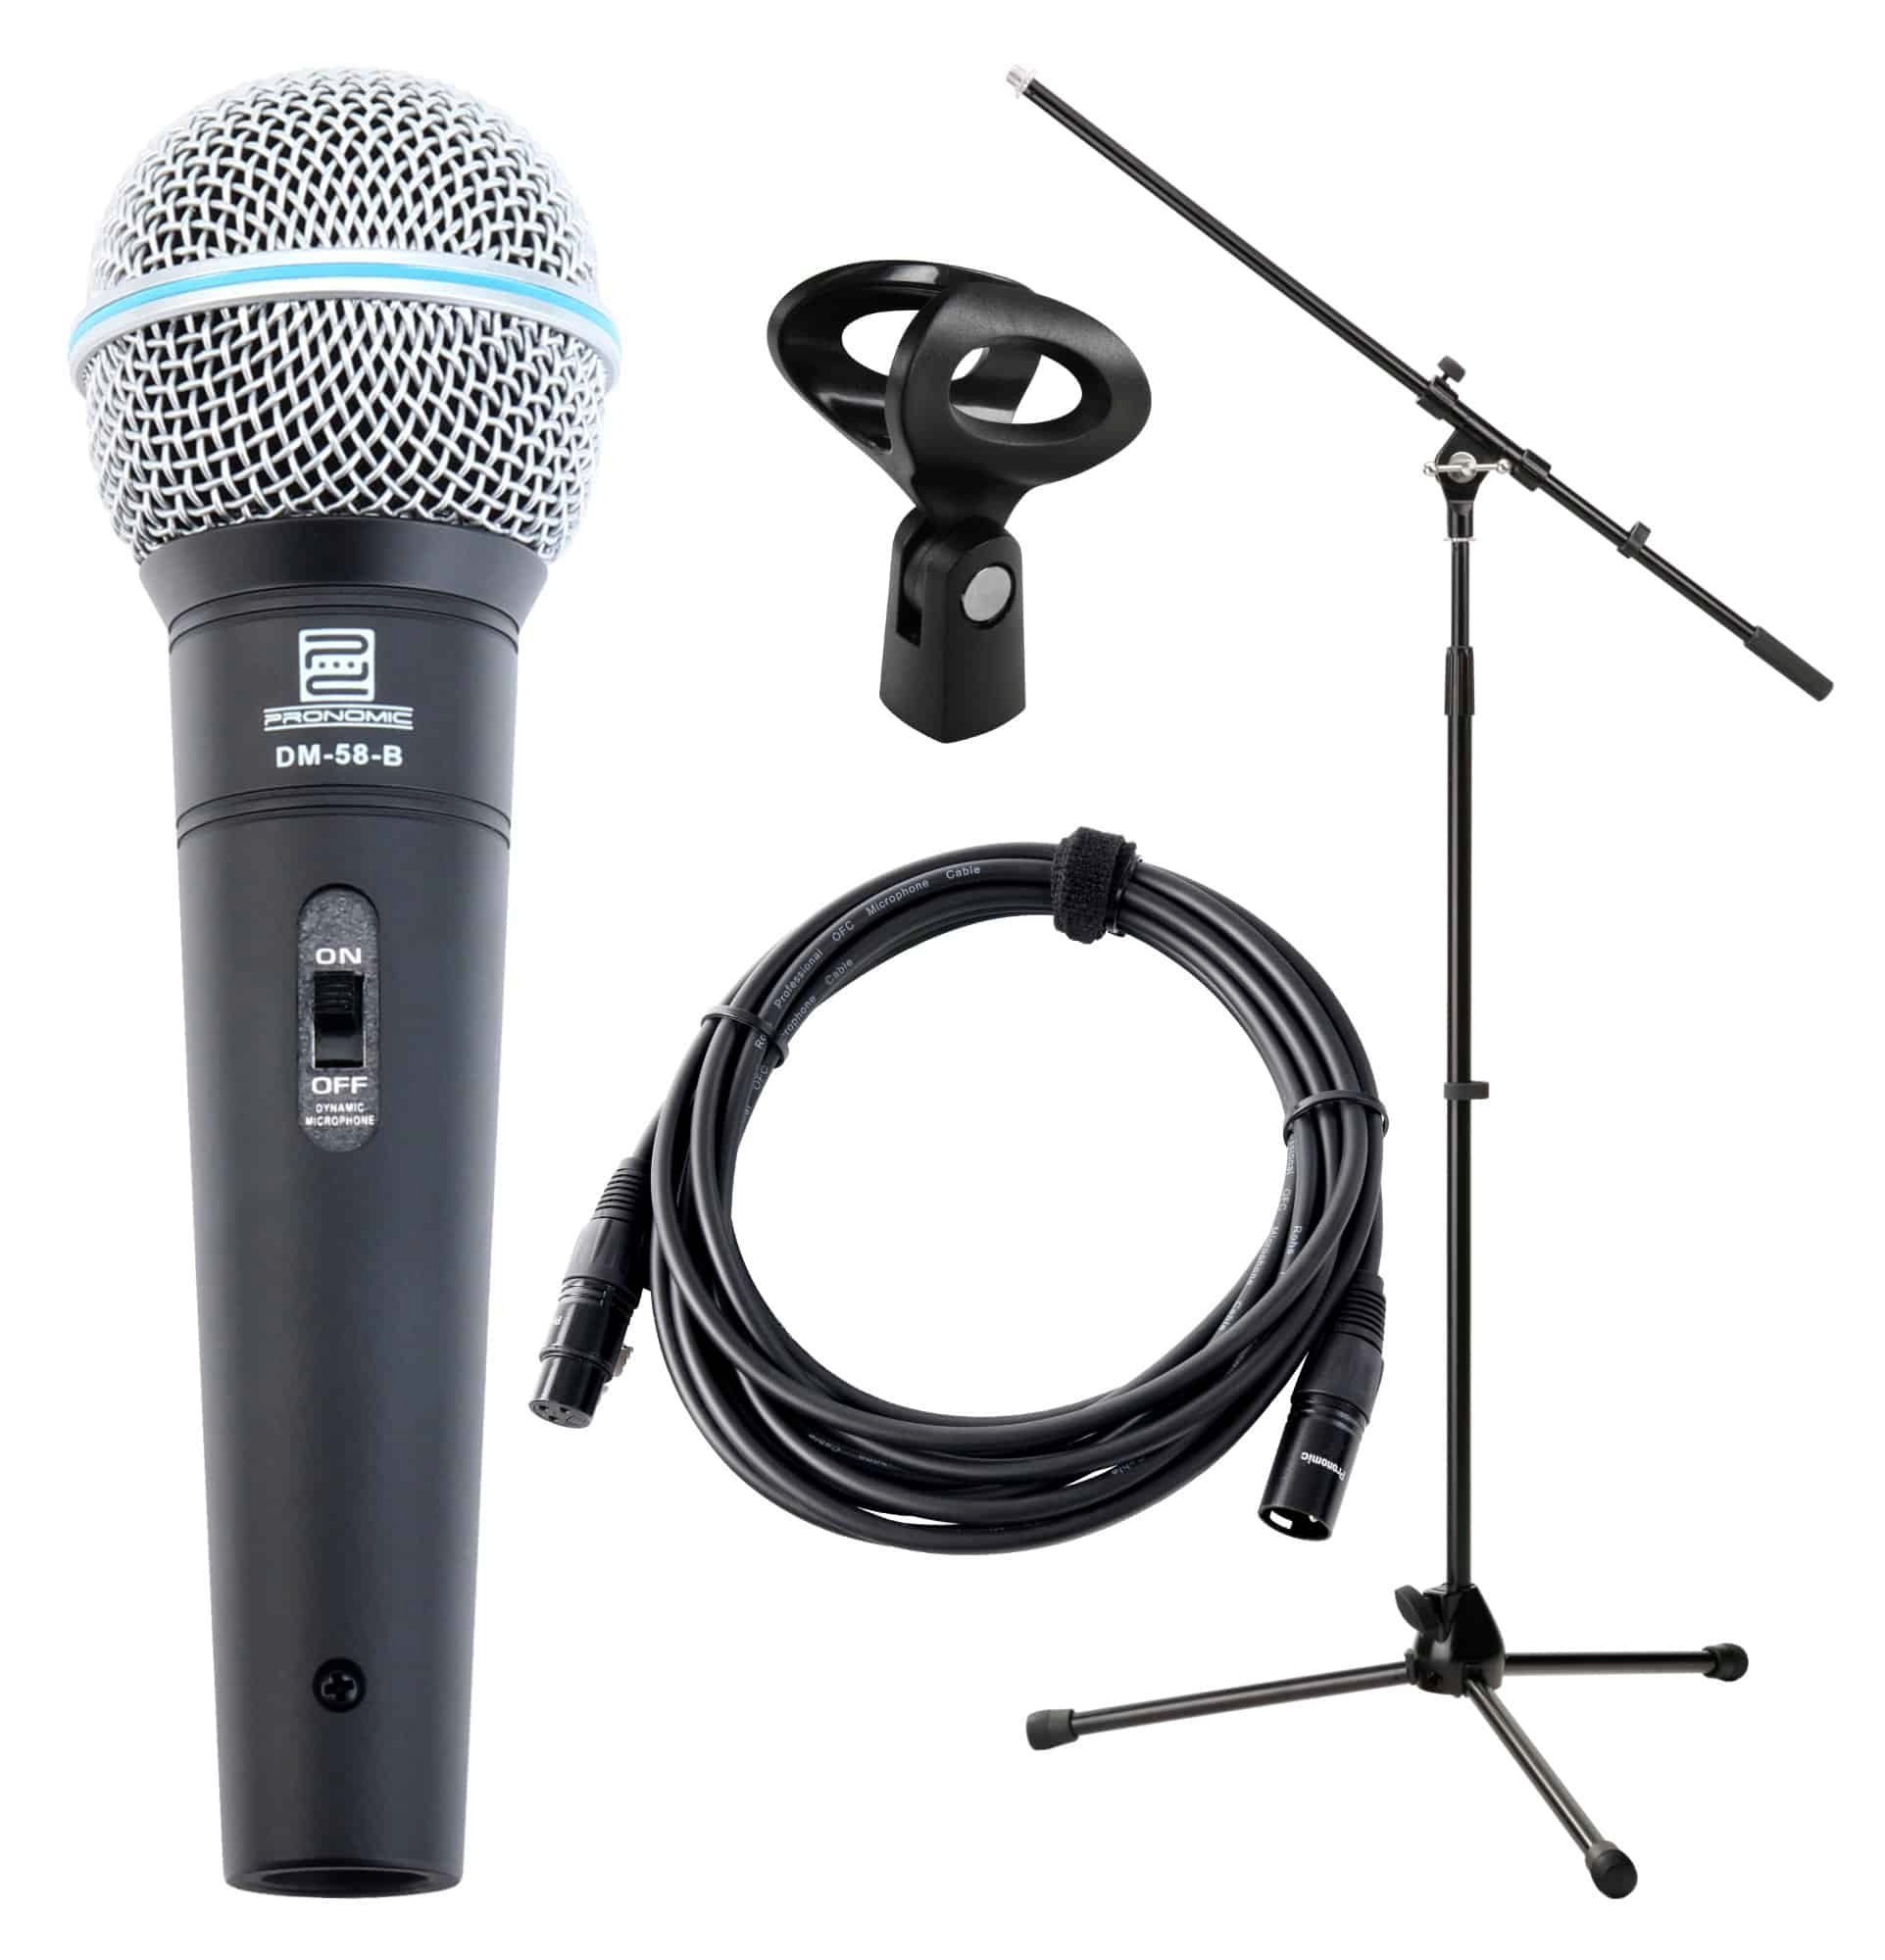 Pronomic Mikrofon DM-58-B Vocal Dynamisches-Mikrofon (Starter-Set, 4-tlg), Inkl. Stativ, Klemme, Gewinde, Etui und Kabel